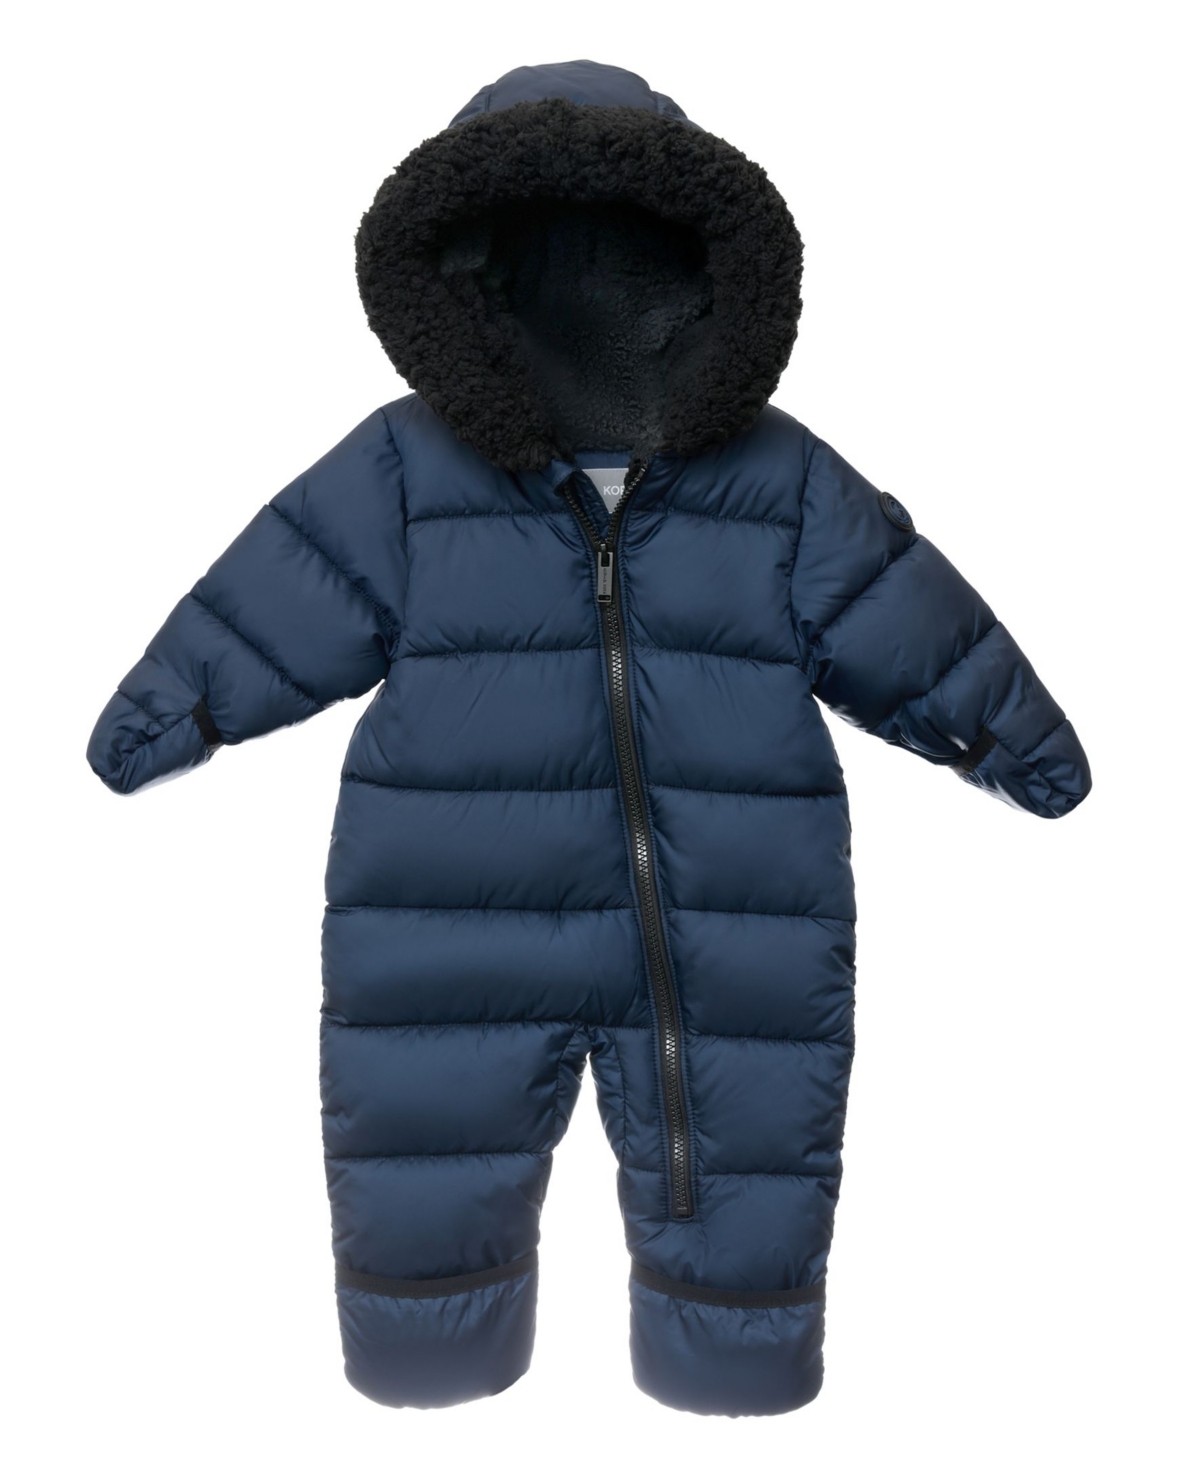 Michael Kors Baby Boys Heavy Weight Sherpa Lined Pram Jacket In Midnight